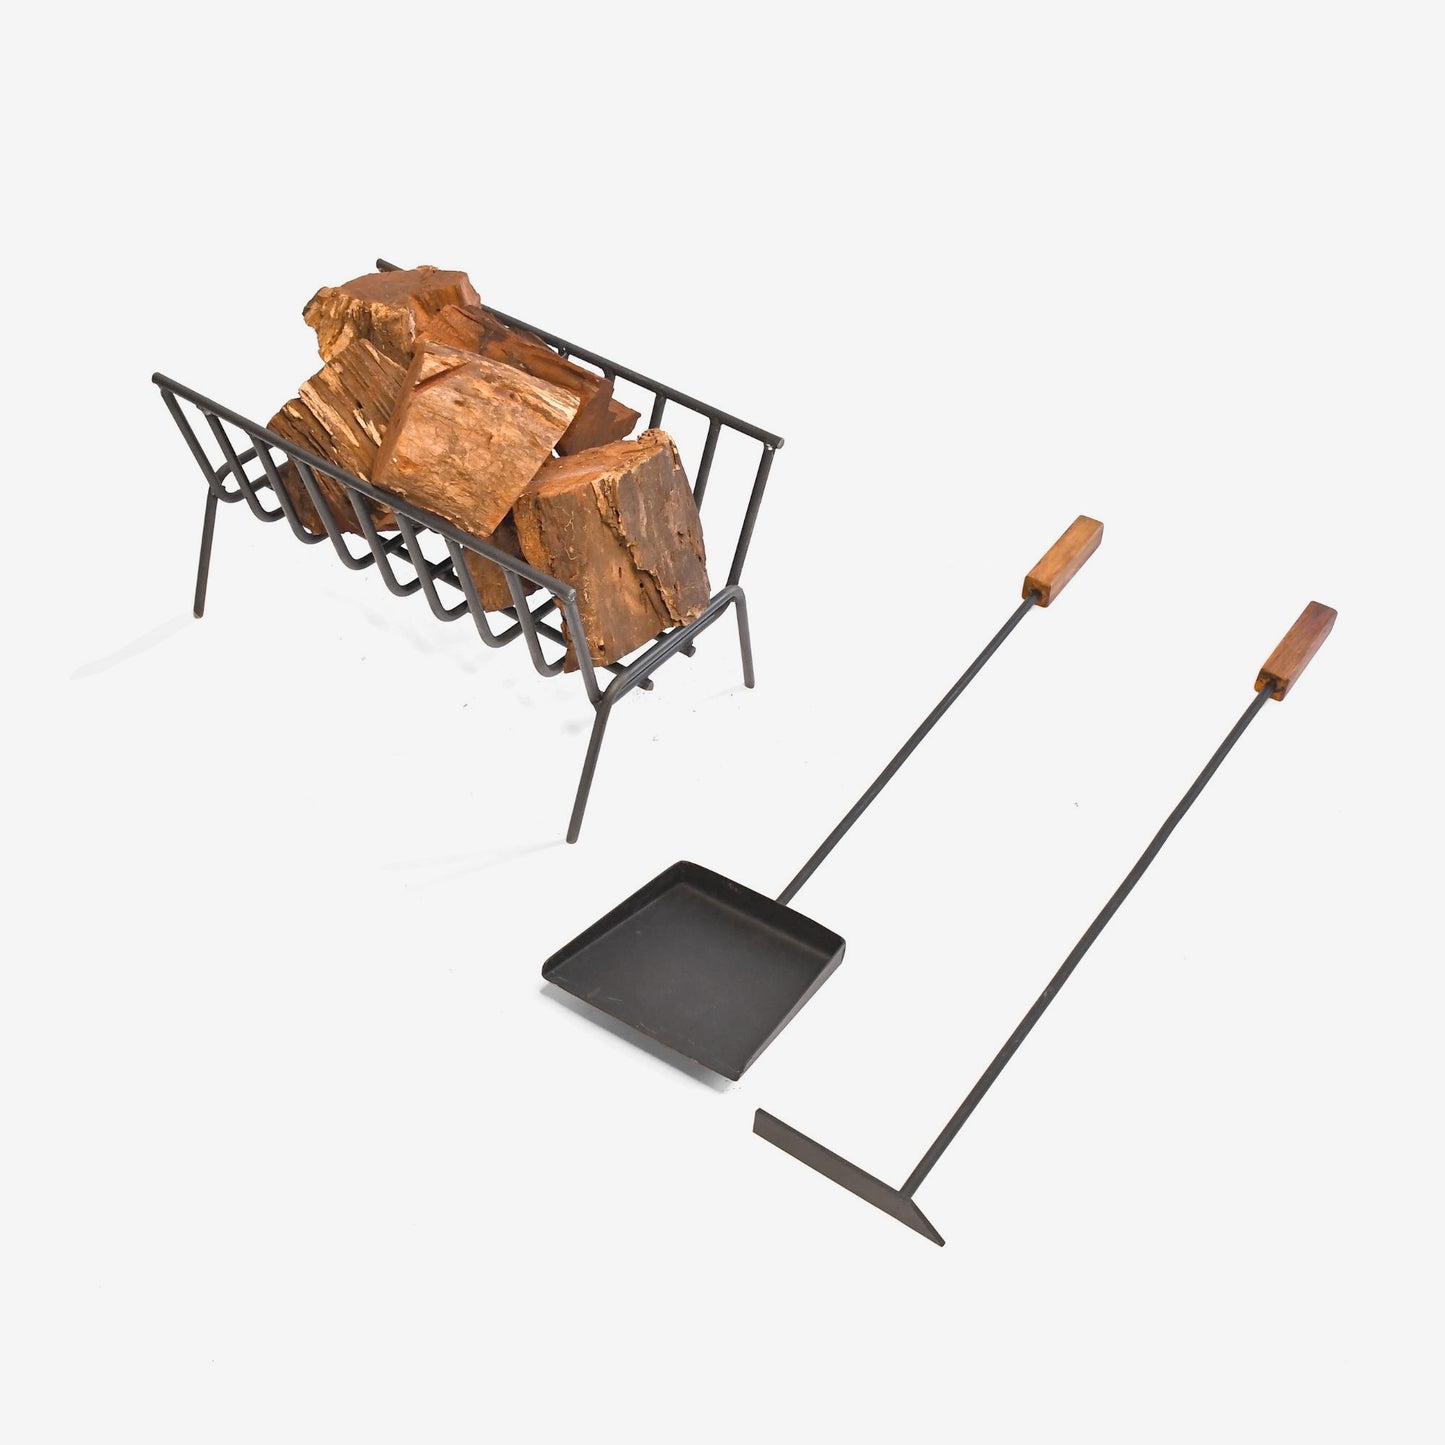 Set Brazier + Fireplace Pit Tools